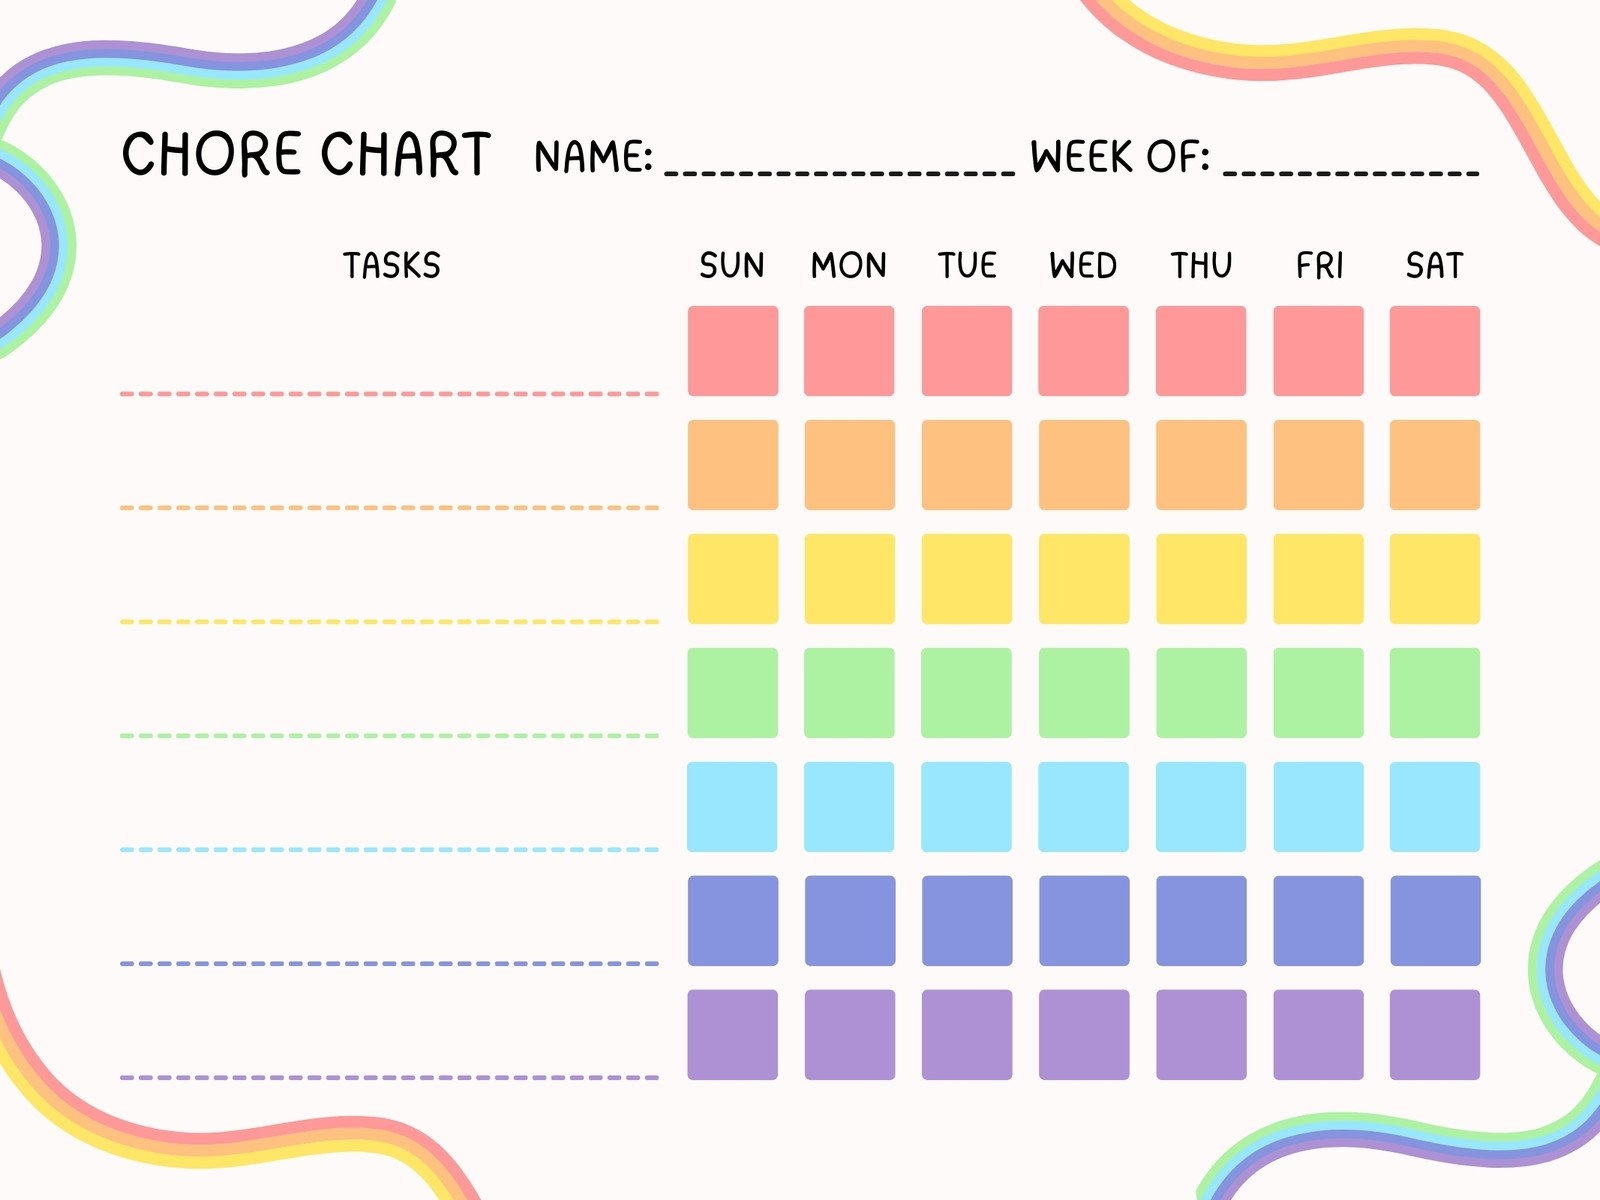 Free Customizable Chore Chart Templates To Print Canva - Free Printable Chore Chart Ideas